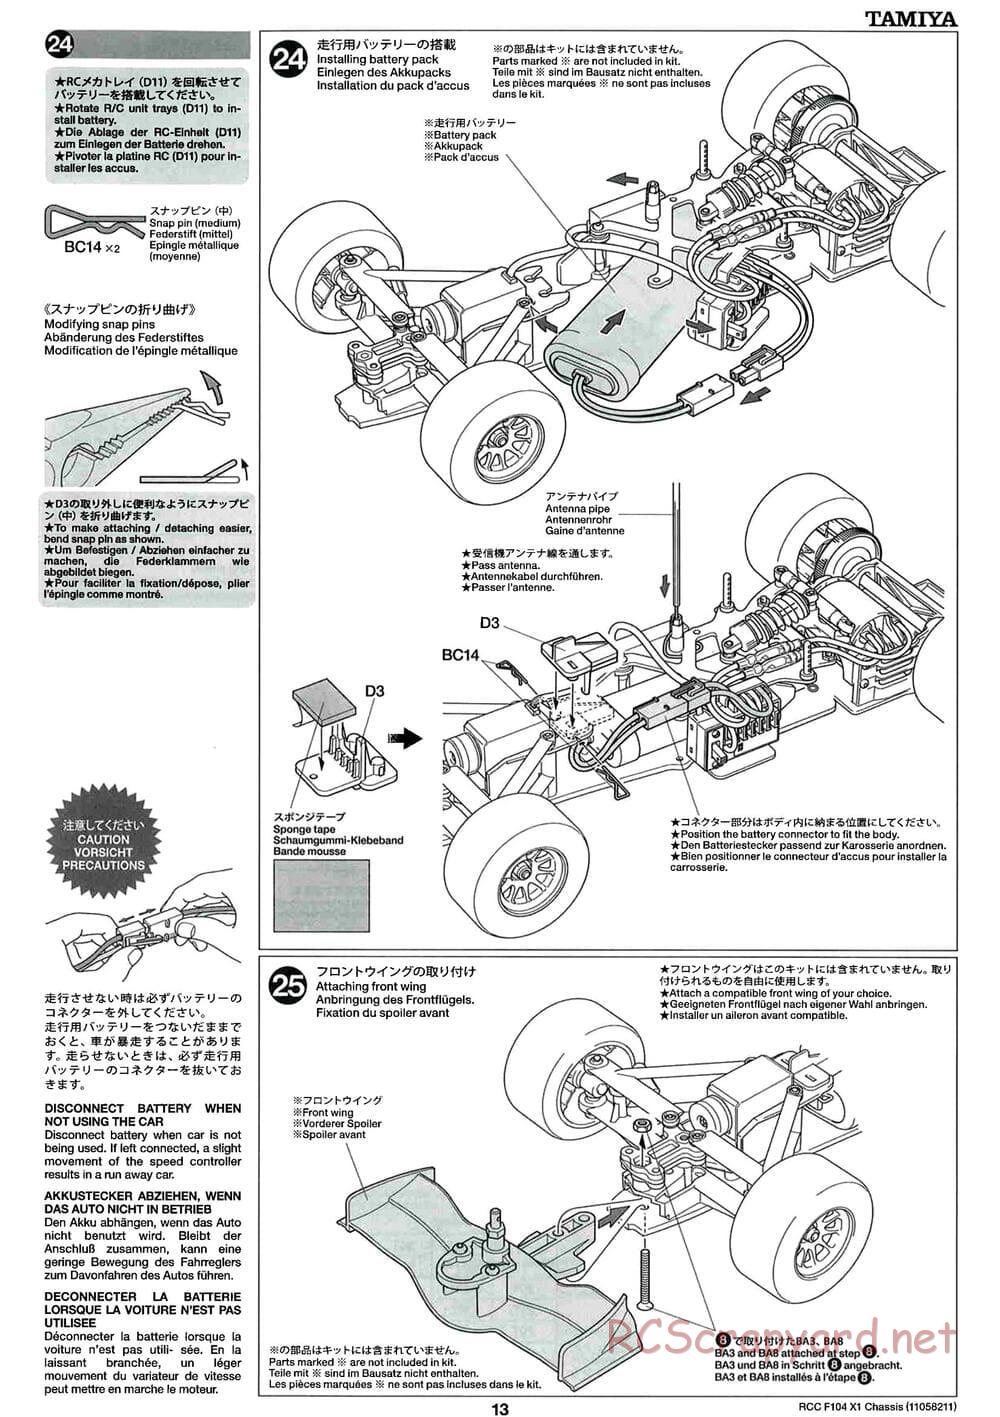 Tamiya - F104X1 Chassis - Manual - Page 13